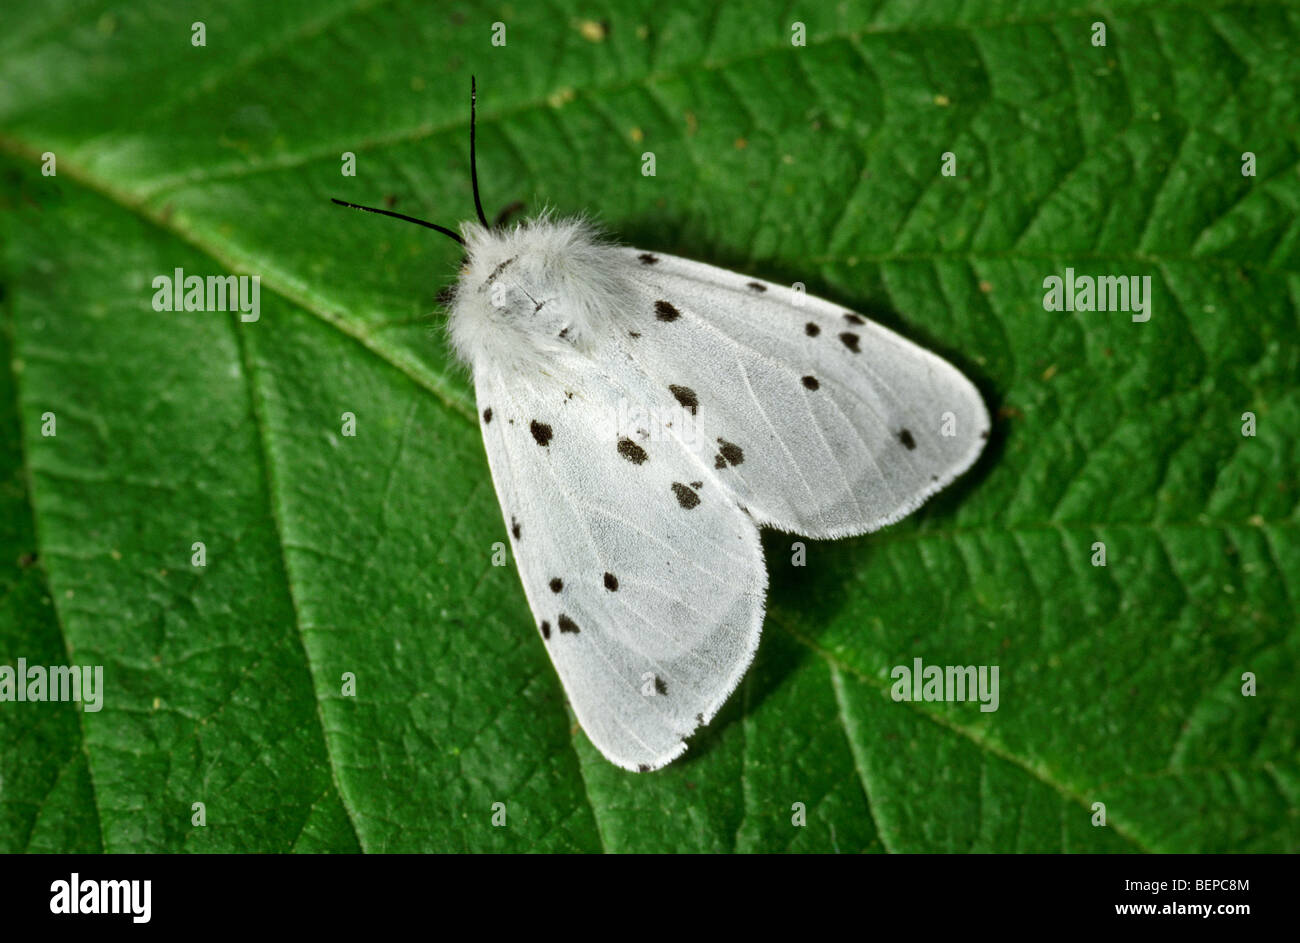 White ermine (Spilosoma lubricipeda) on leaf, Belgium Stock Photo